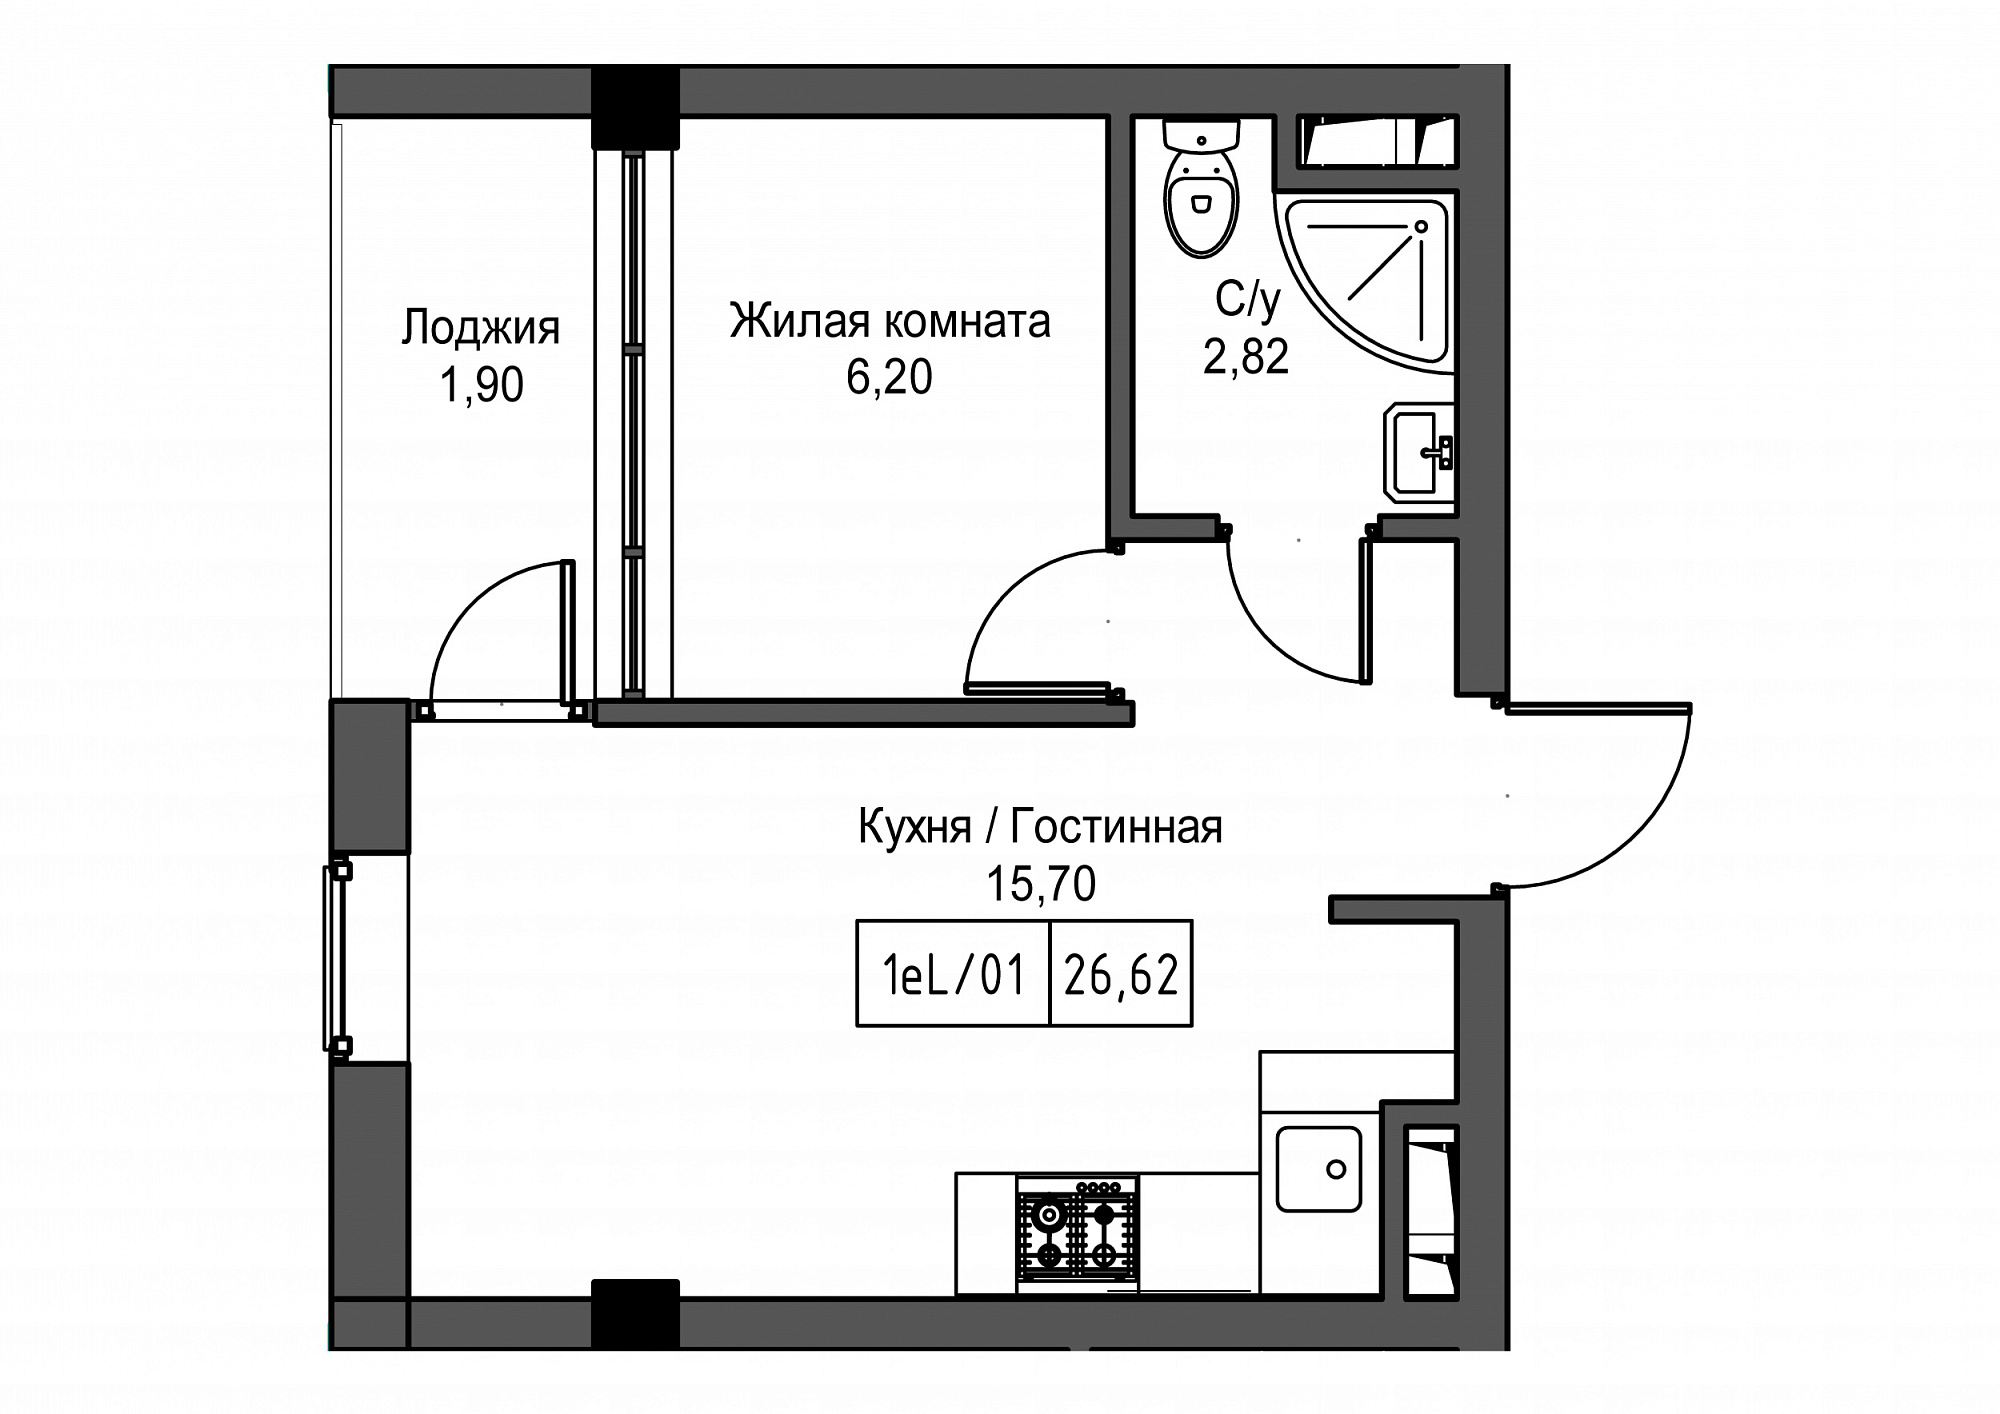 Планування 1-к квартира площею 26.62м2, UM-002-02/0097.